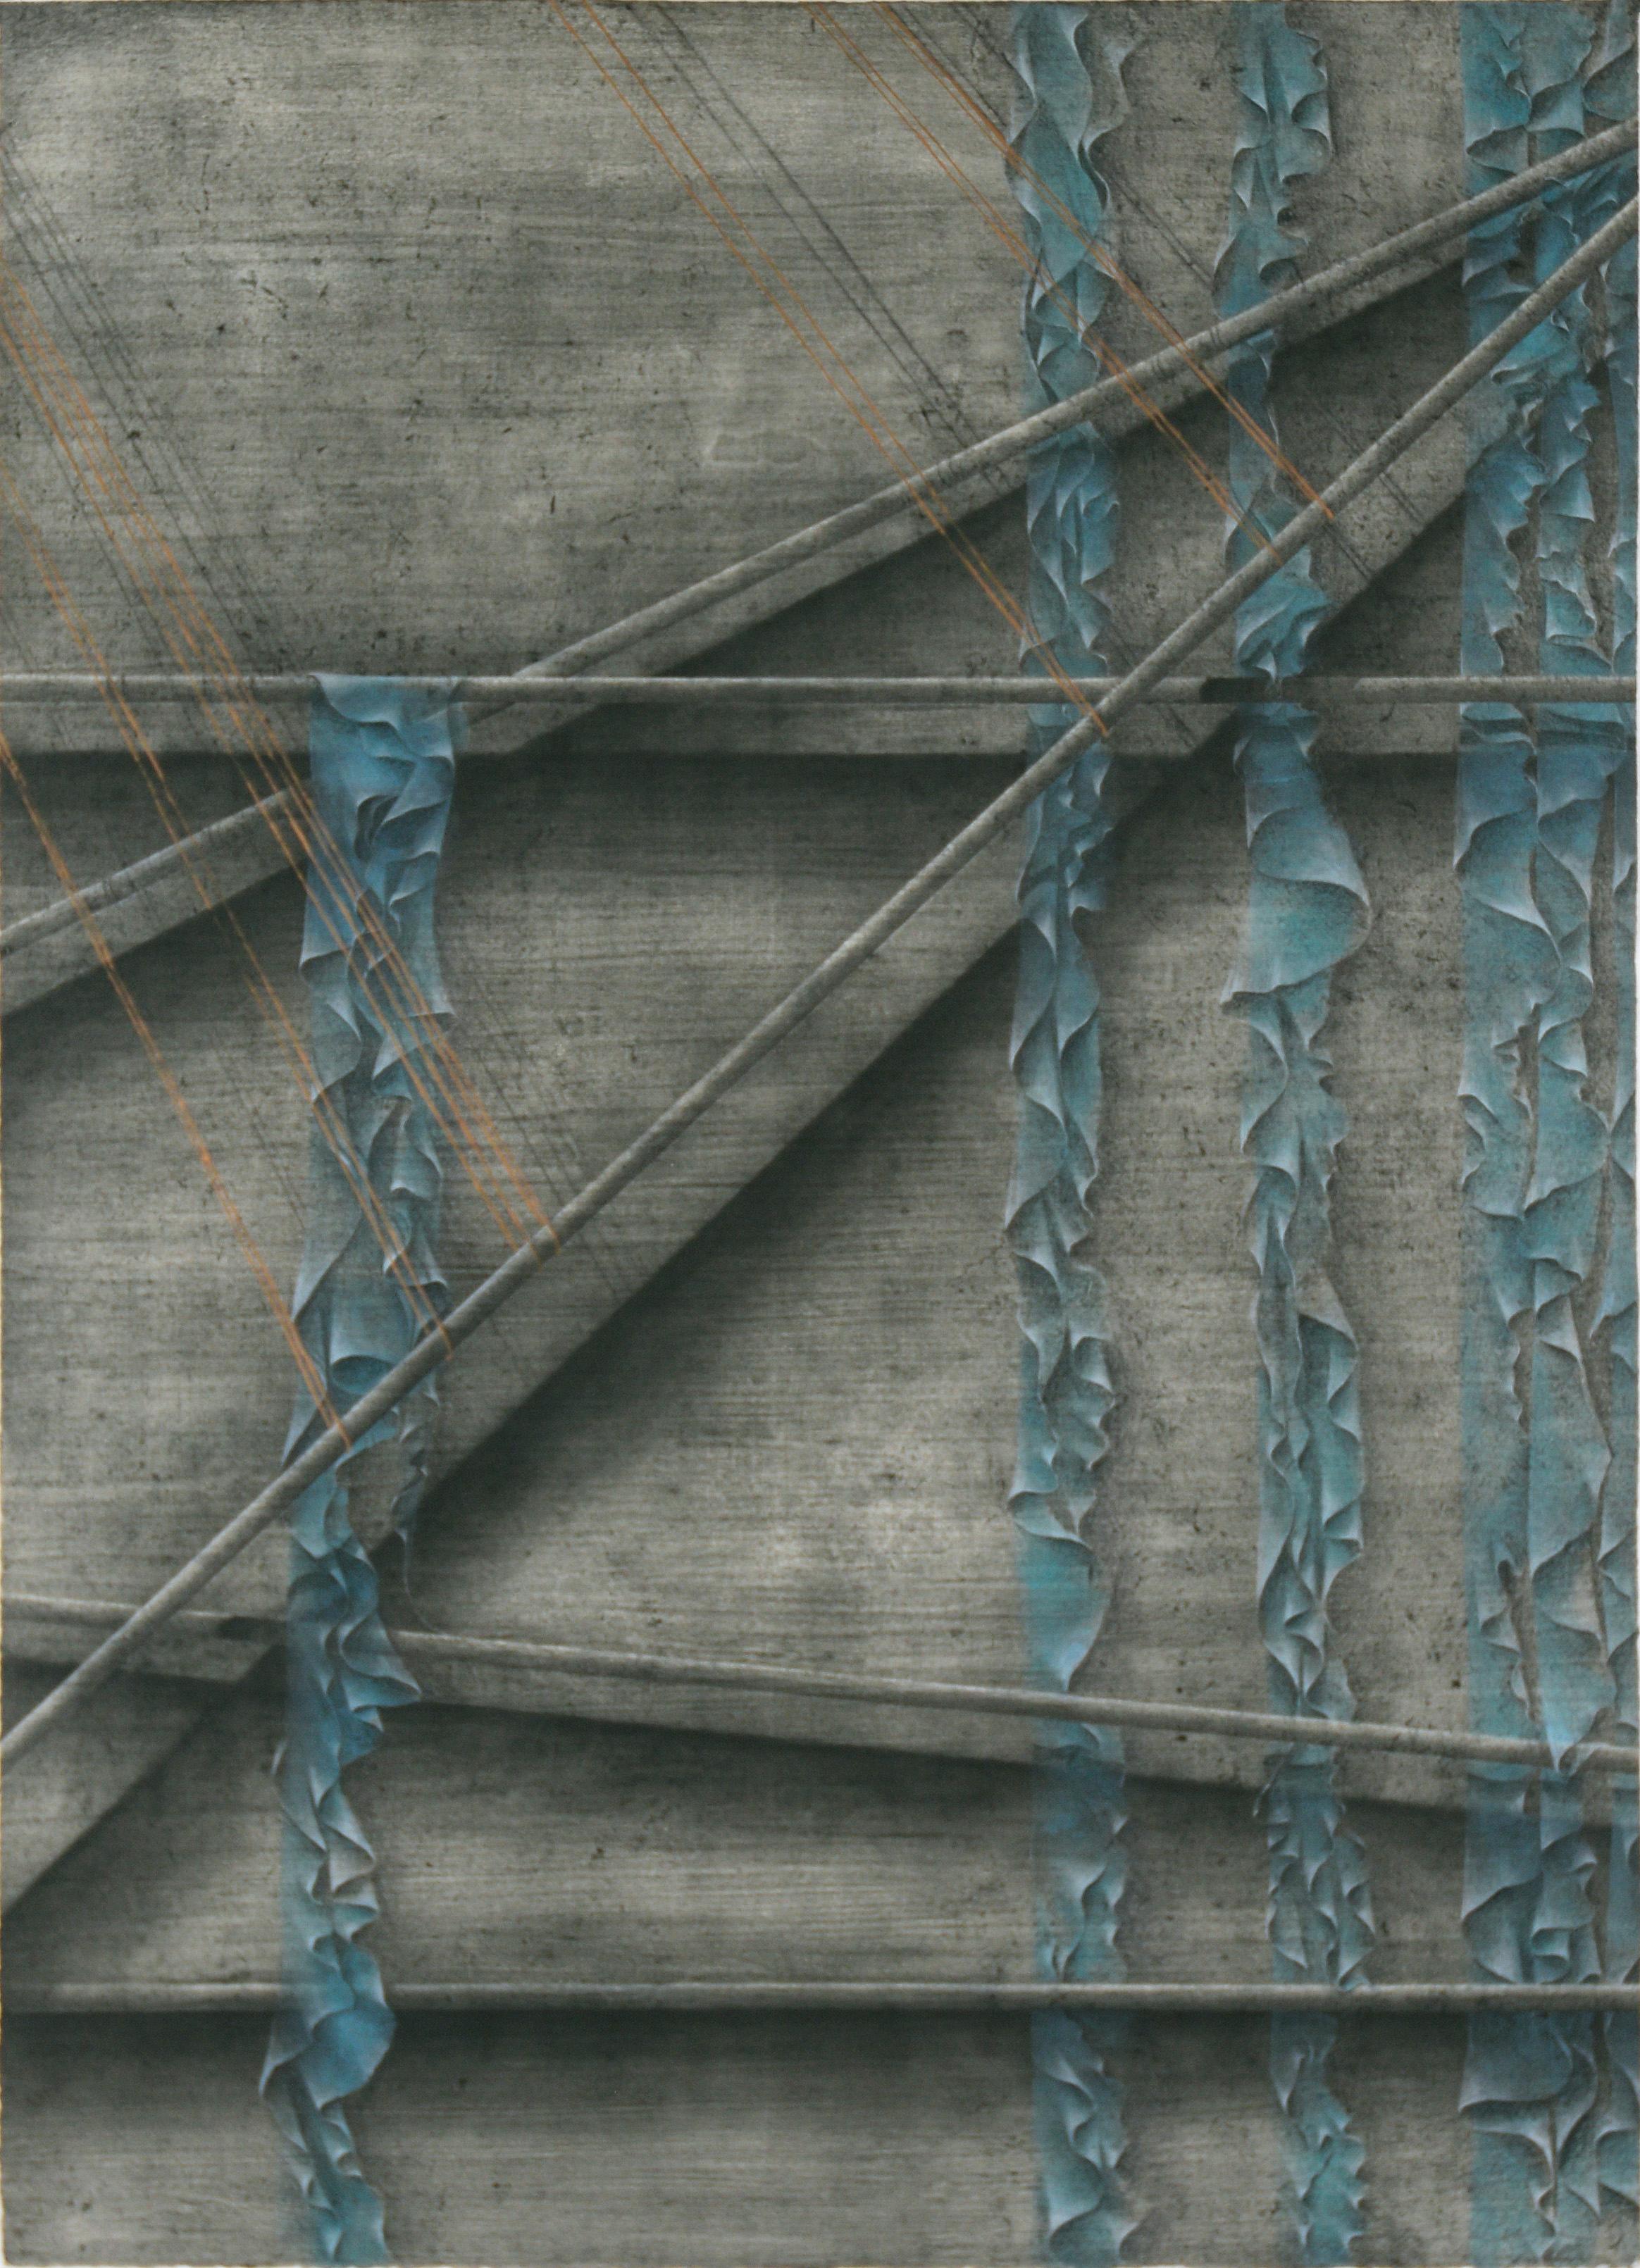 Teal Ribbons and Copper Thread - Fotorealistische Zeichnung auf Collotype  – Art von Patricia A Pearce